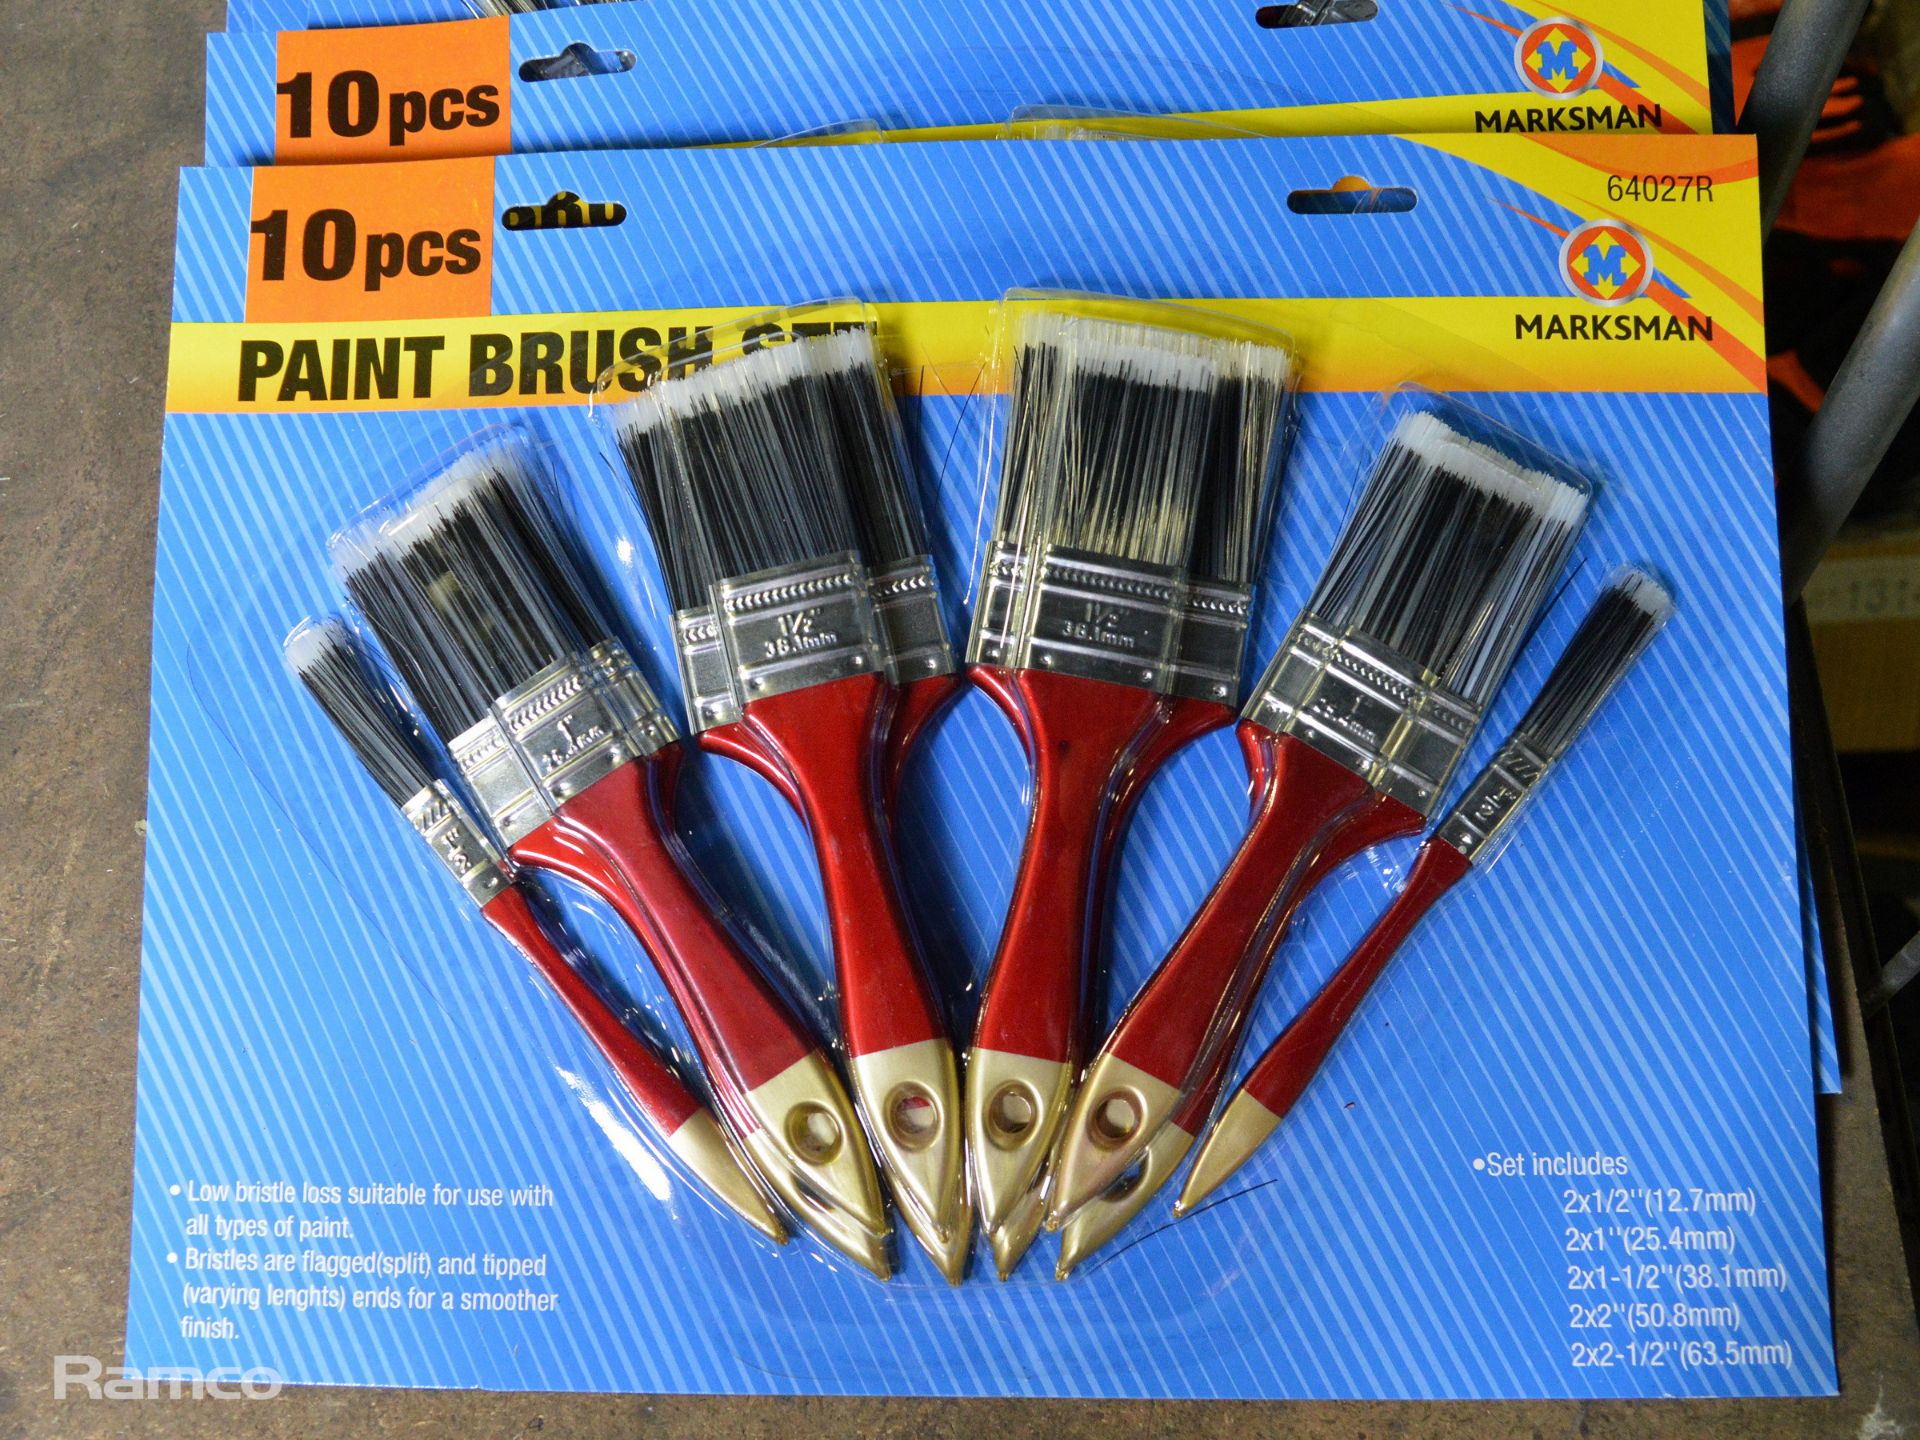 10x Marksman 10pc Paint Brush Sets - Image 2 of 3